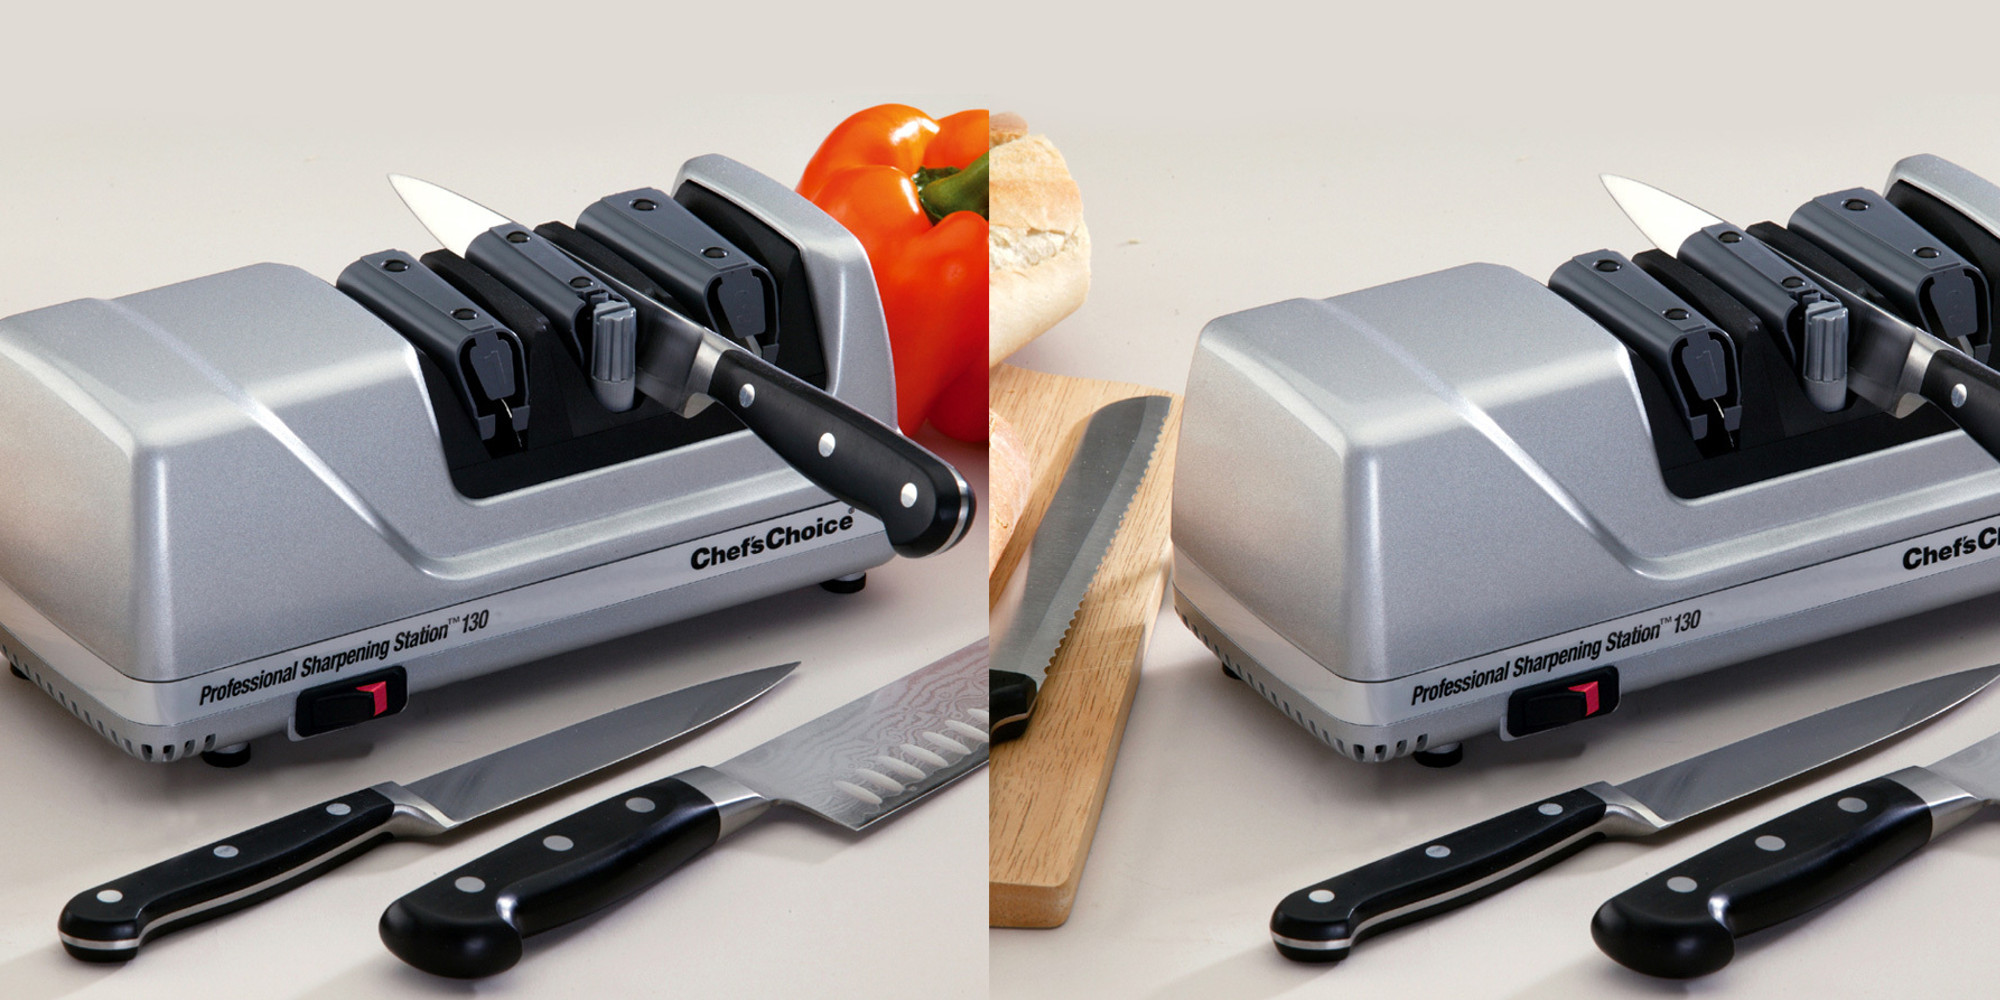 Chef'sChoice Professional 130 Platinum Electric Knife Sharpener